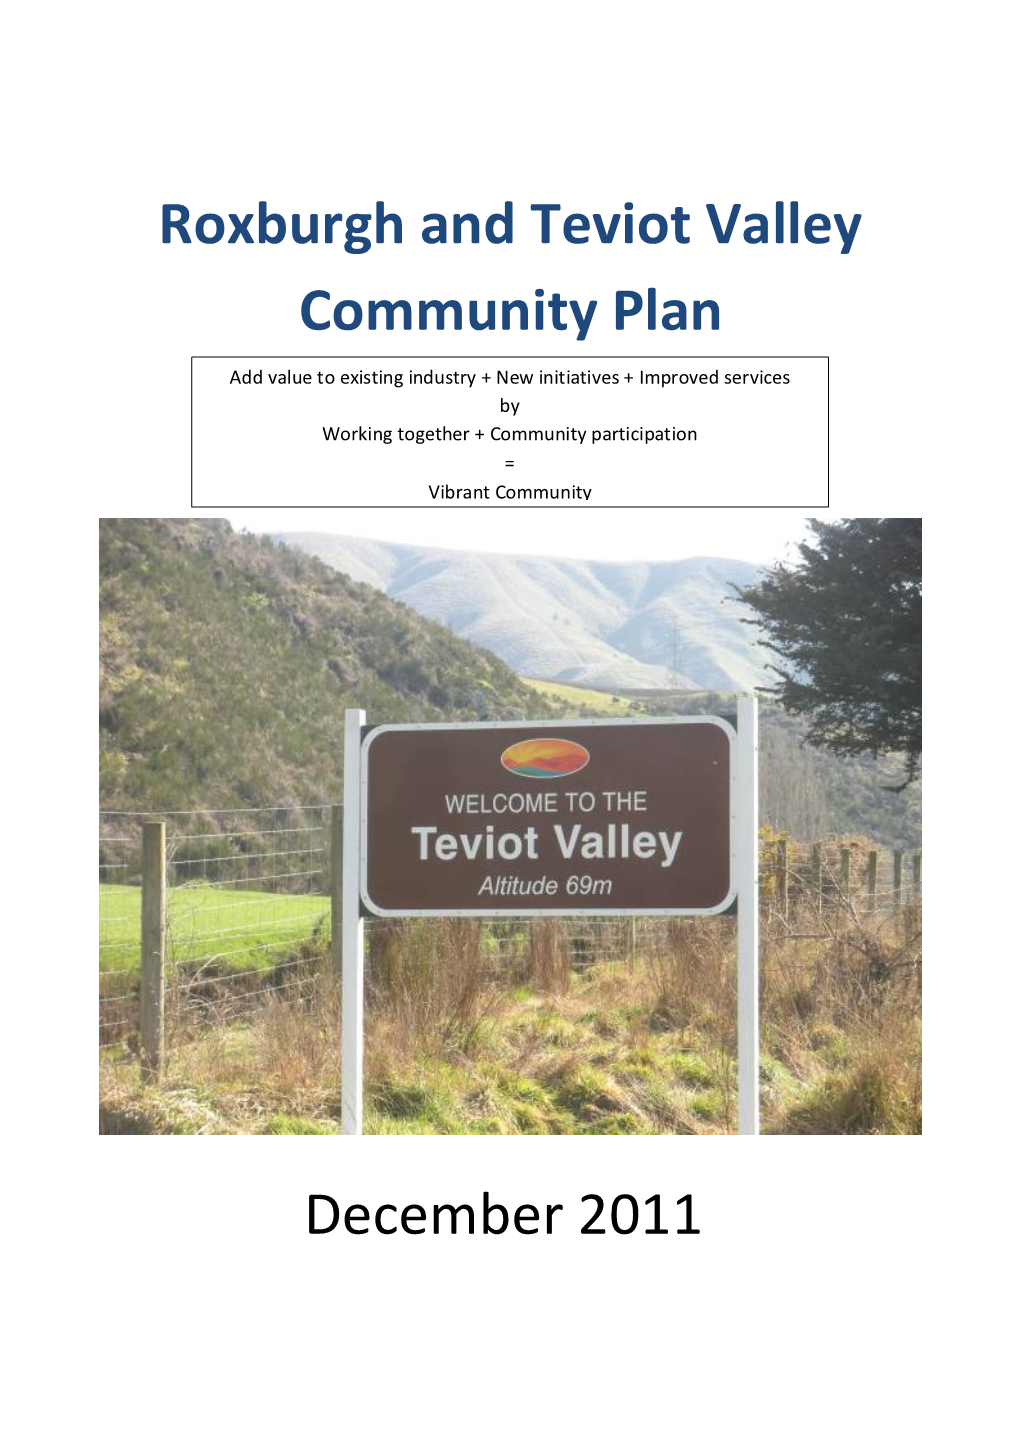 December 2011 Roxburgh and Teviot Valley Community Plan